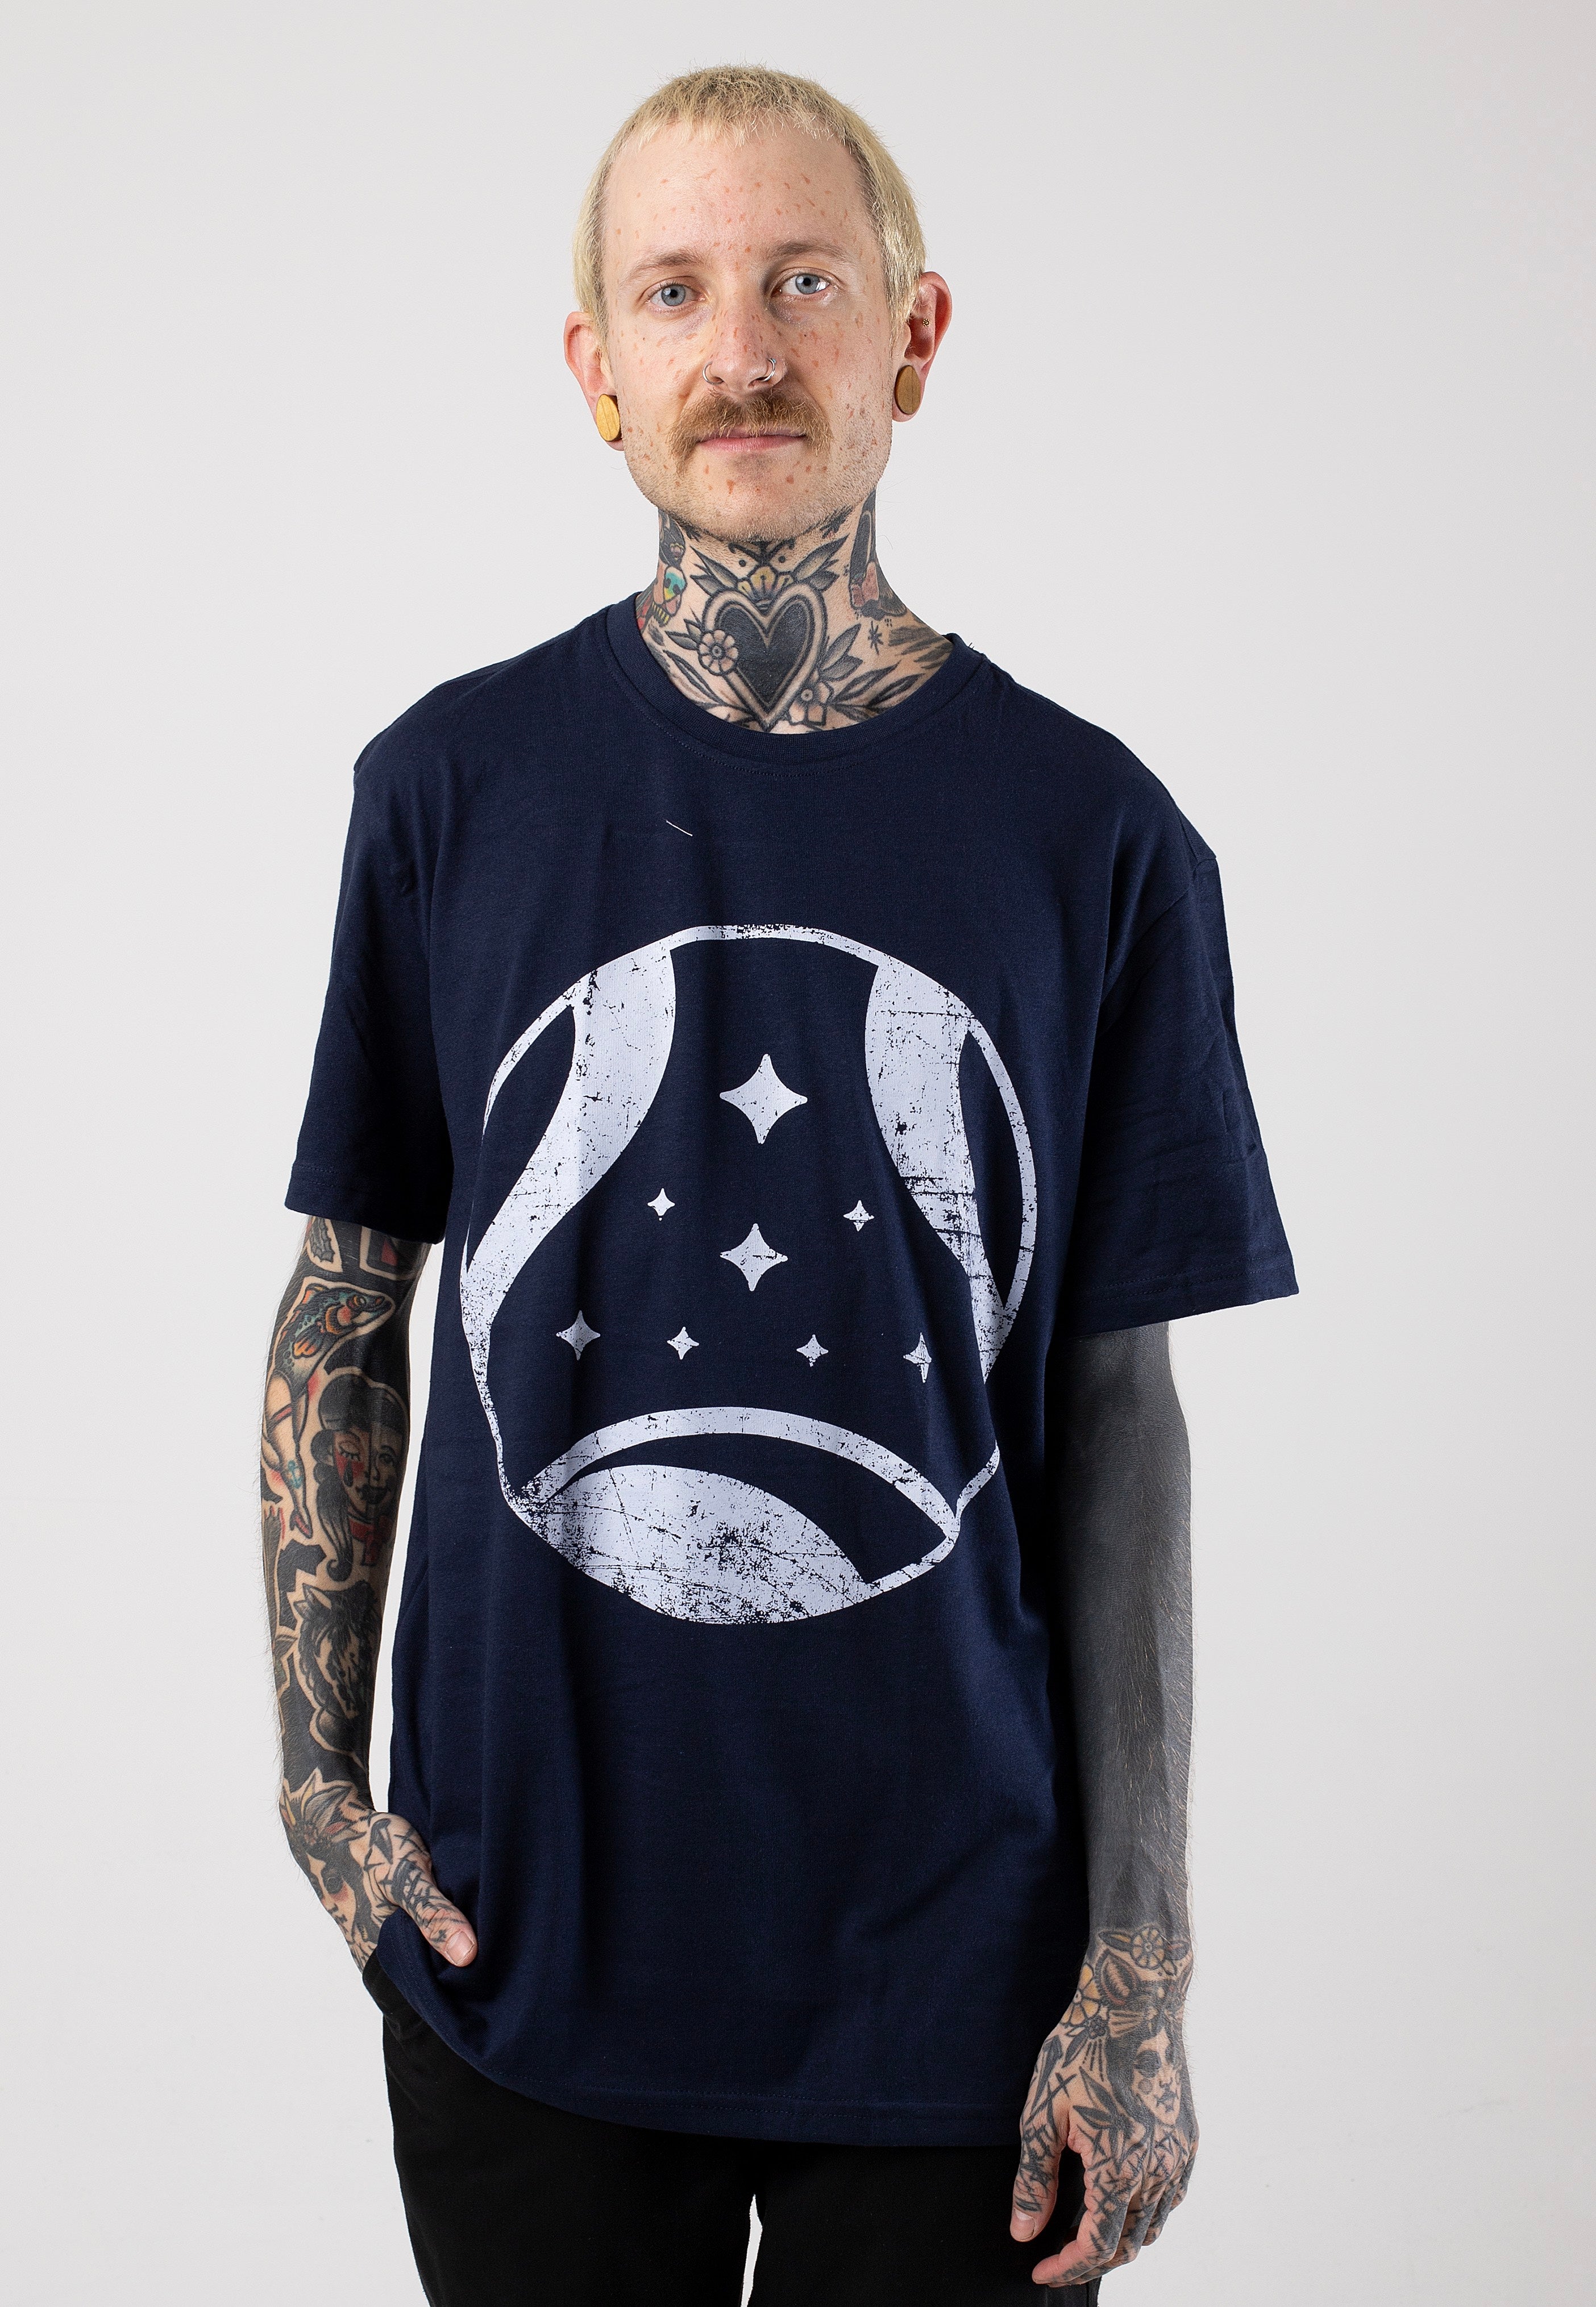 Starfield - Constellation Blue - T-Shirt | Men-Image